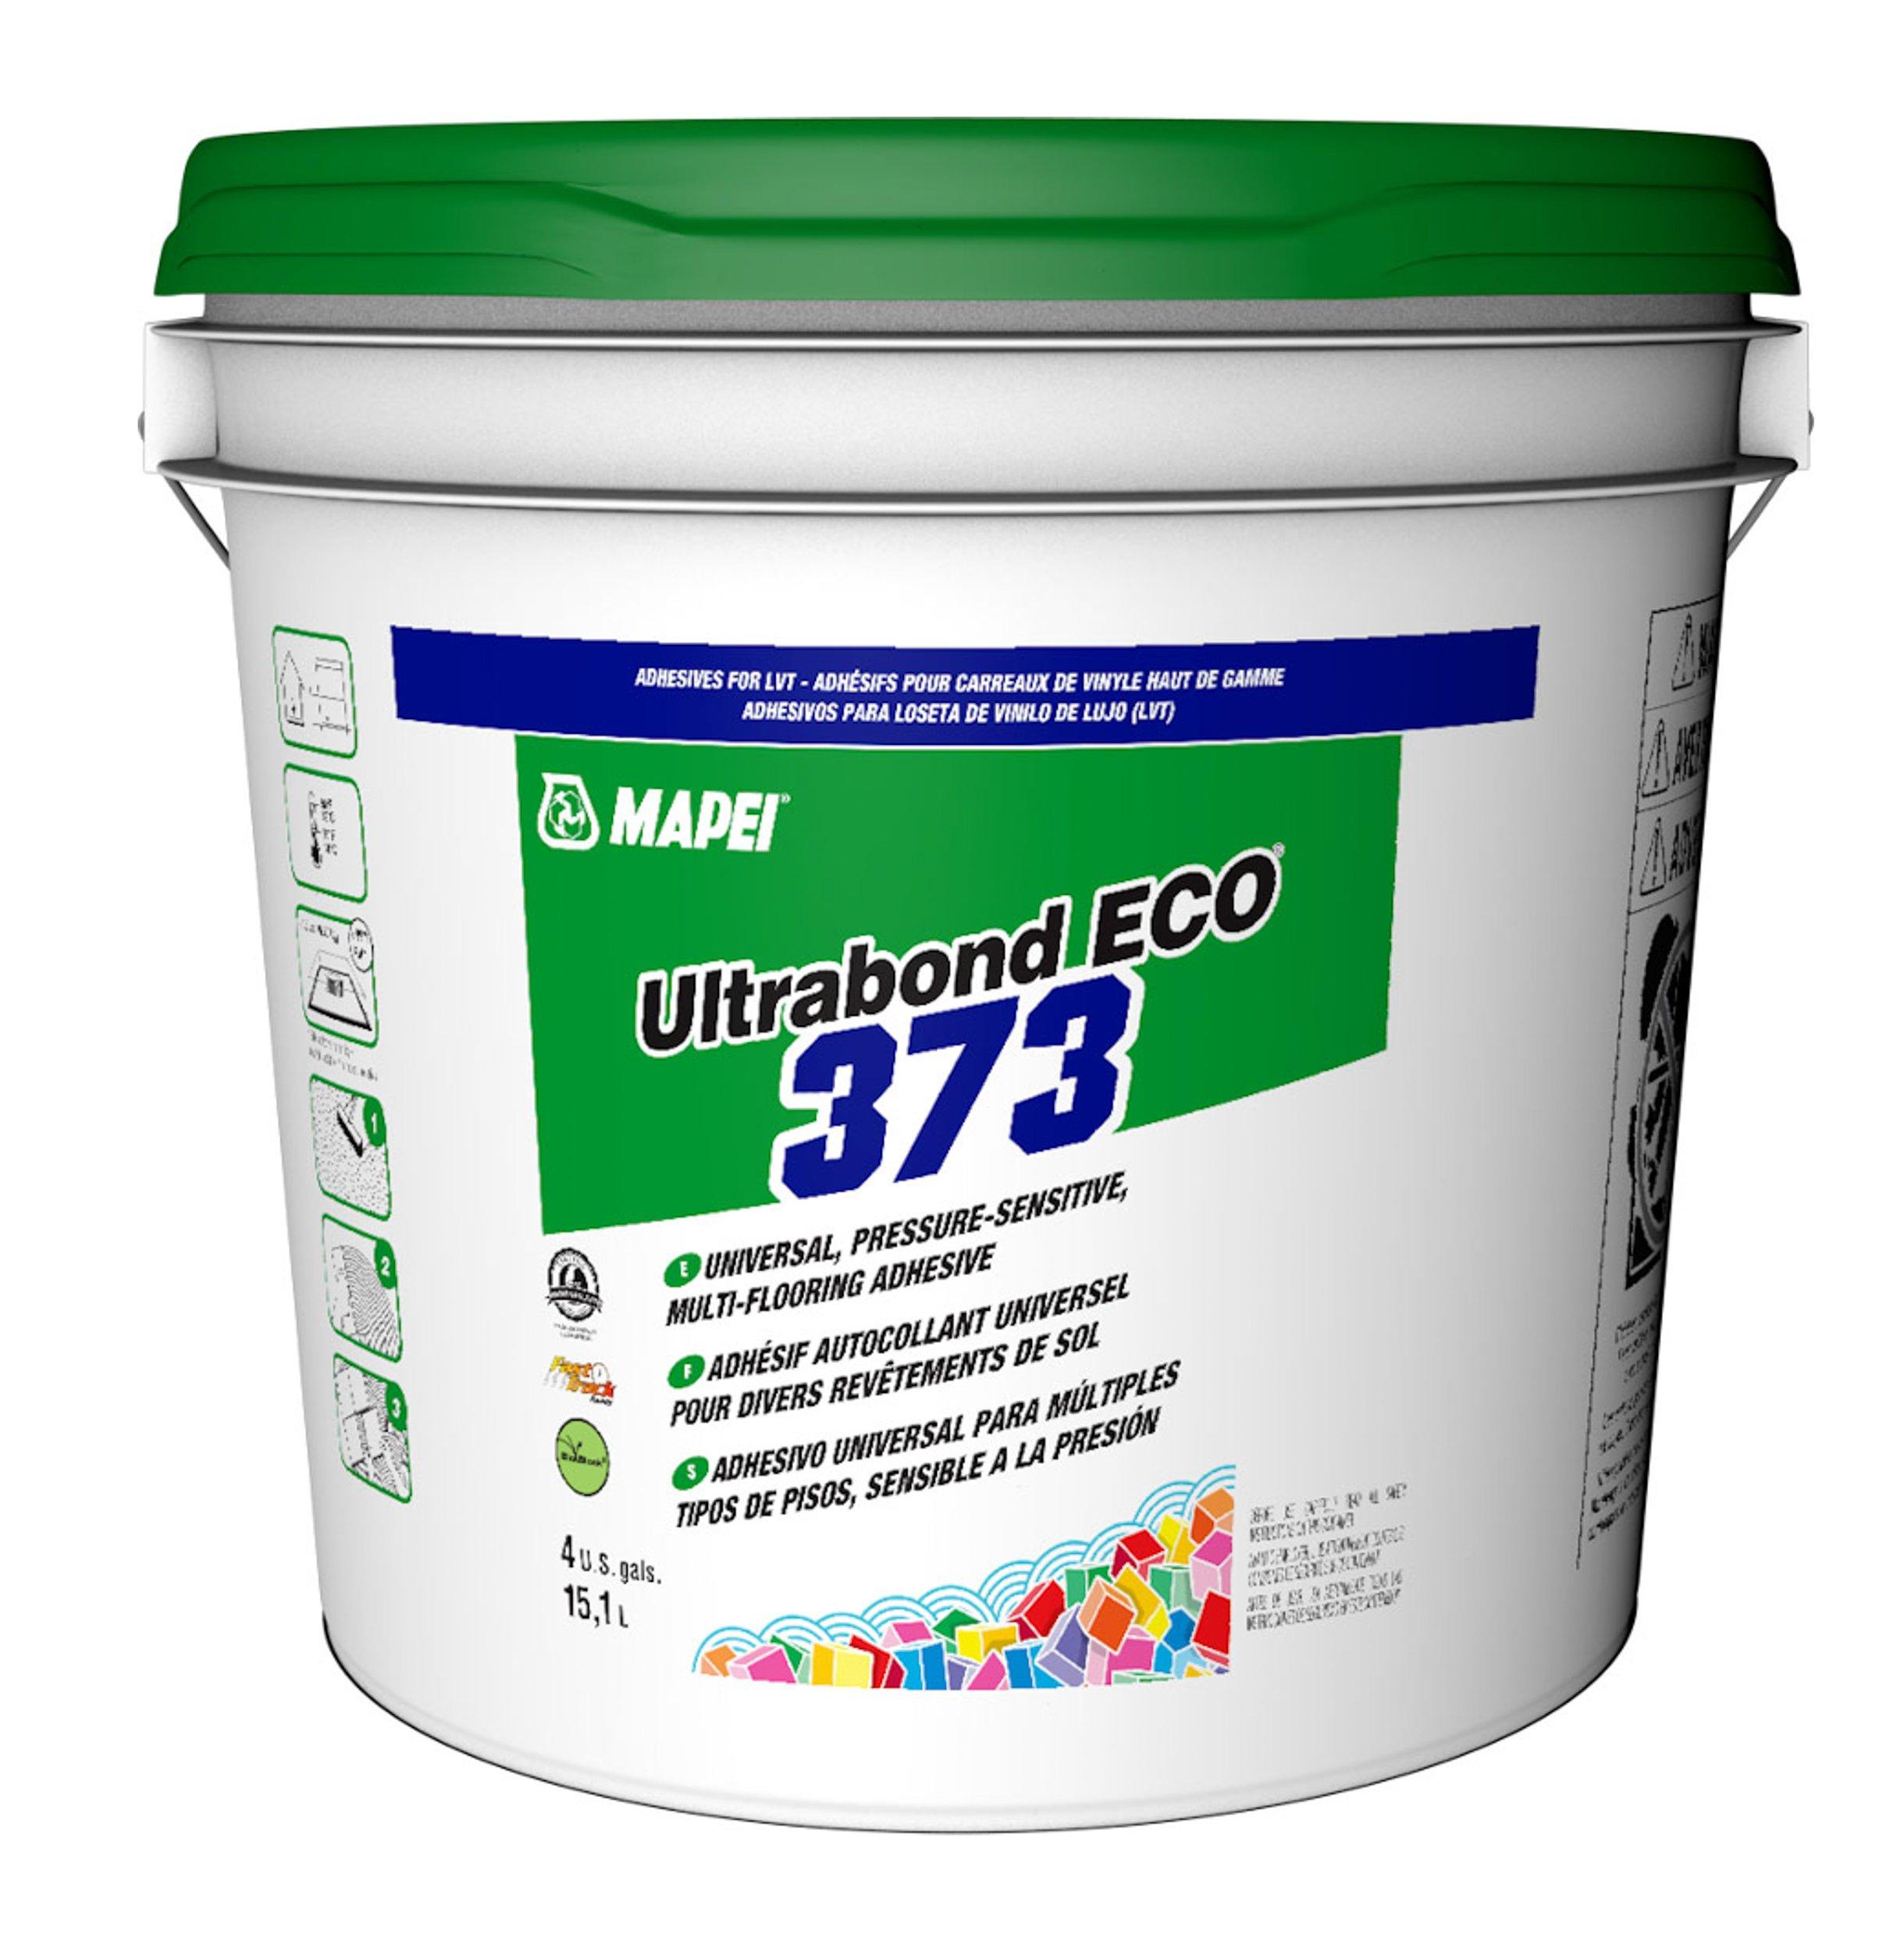 Mapei Ultrabond Eco 373 Universal Pressure-Sensitive Multi-Flooring Adhesive